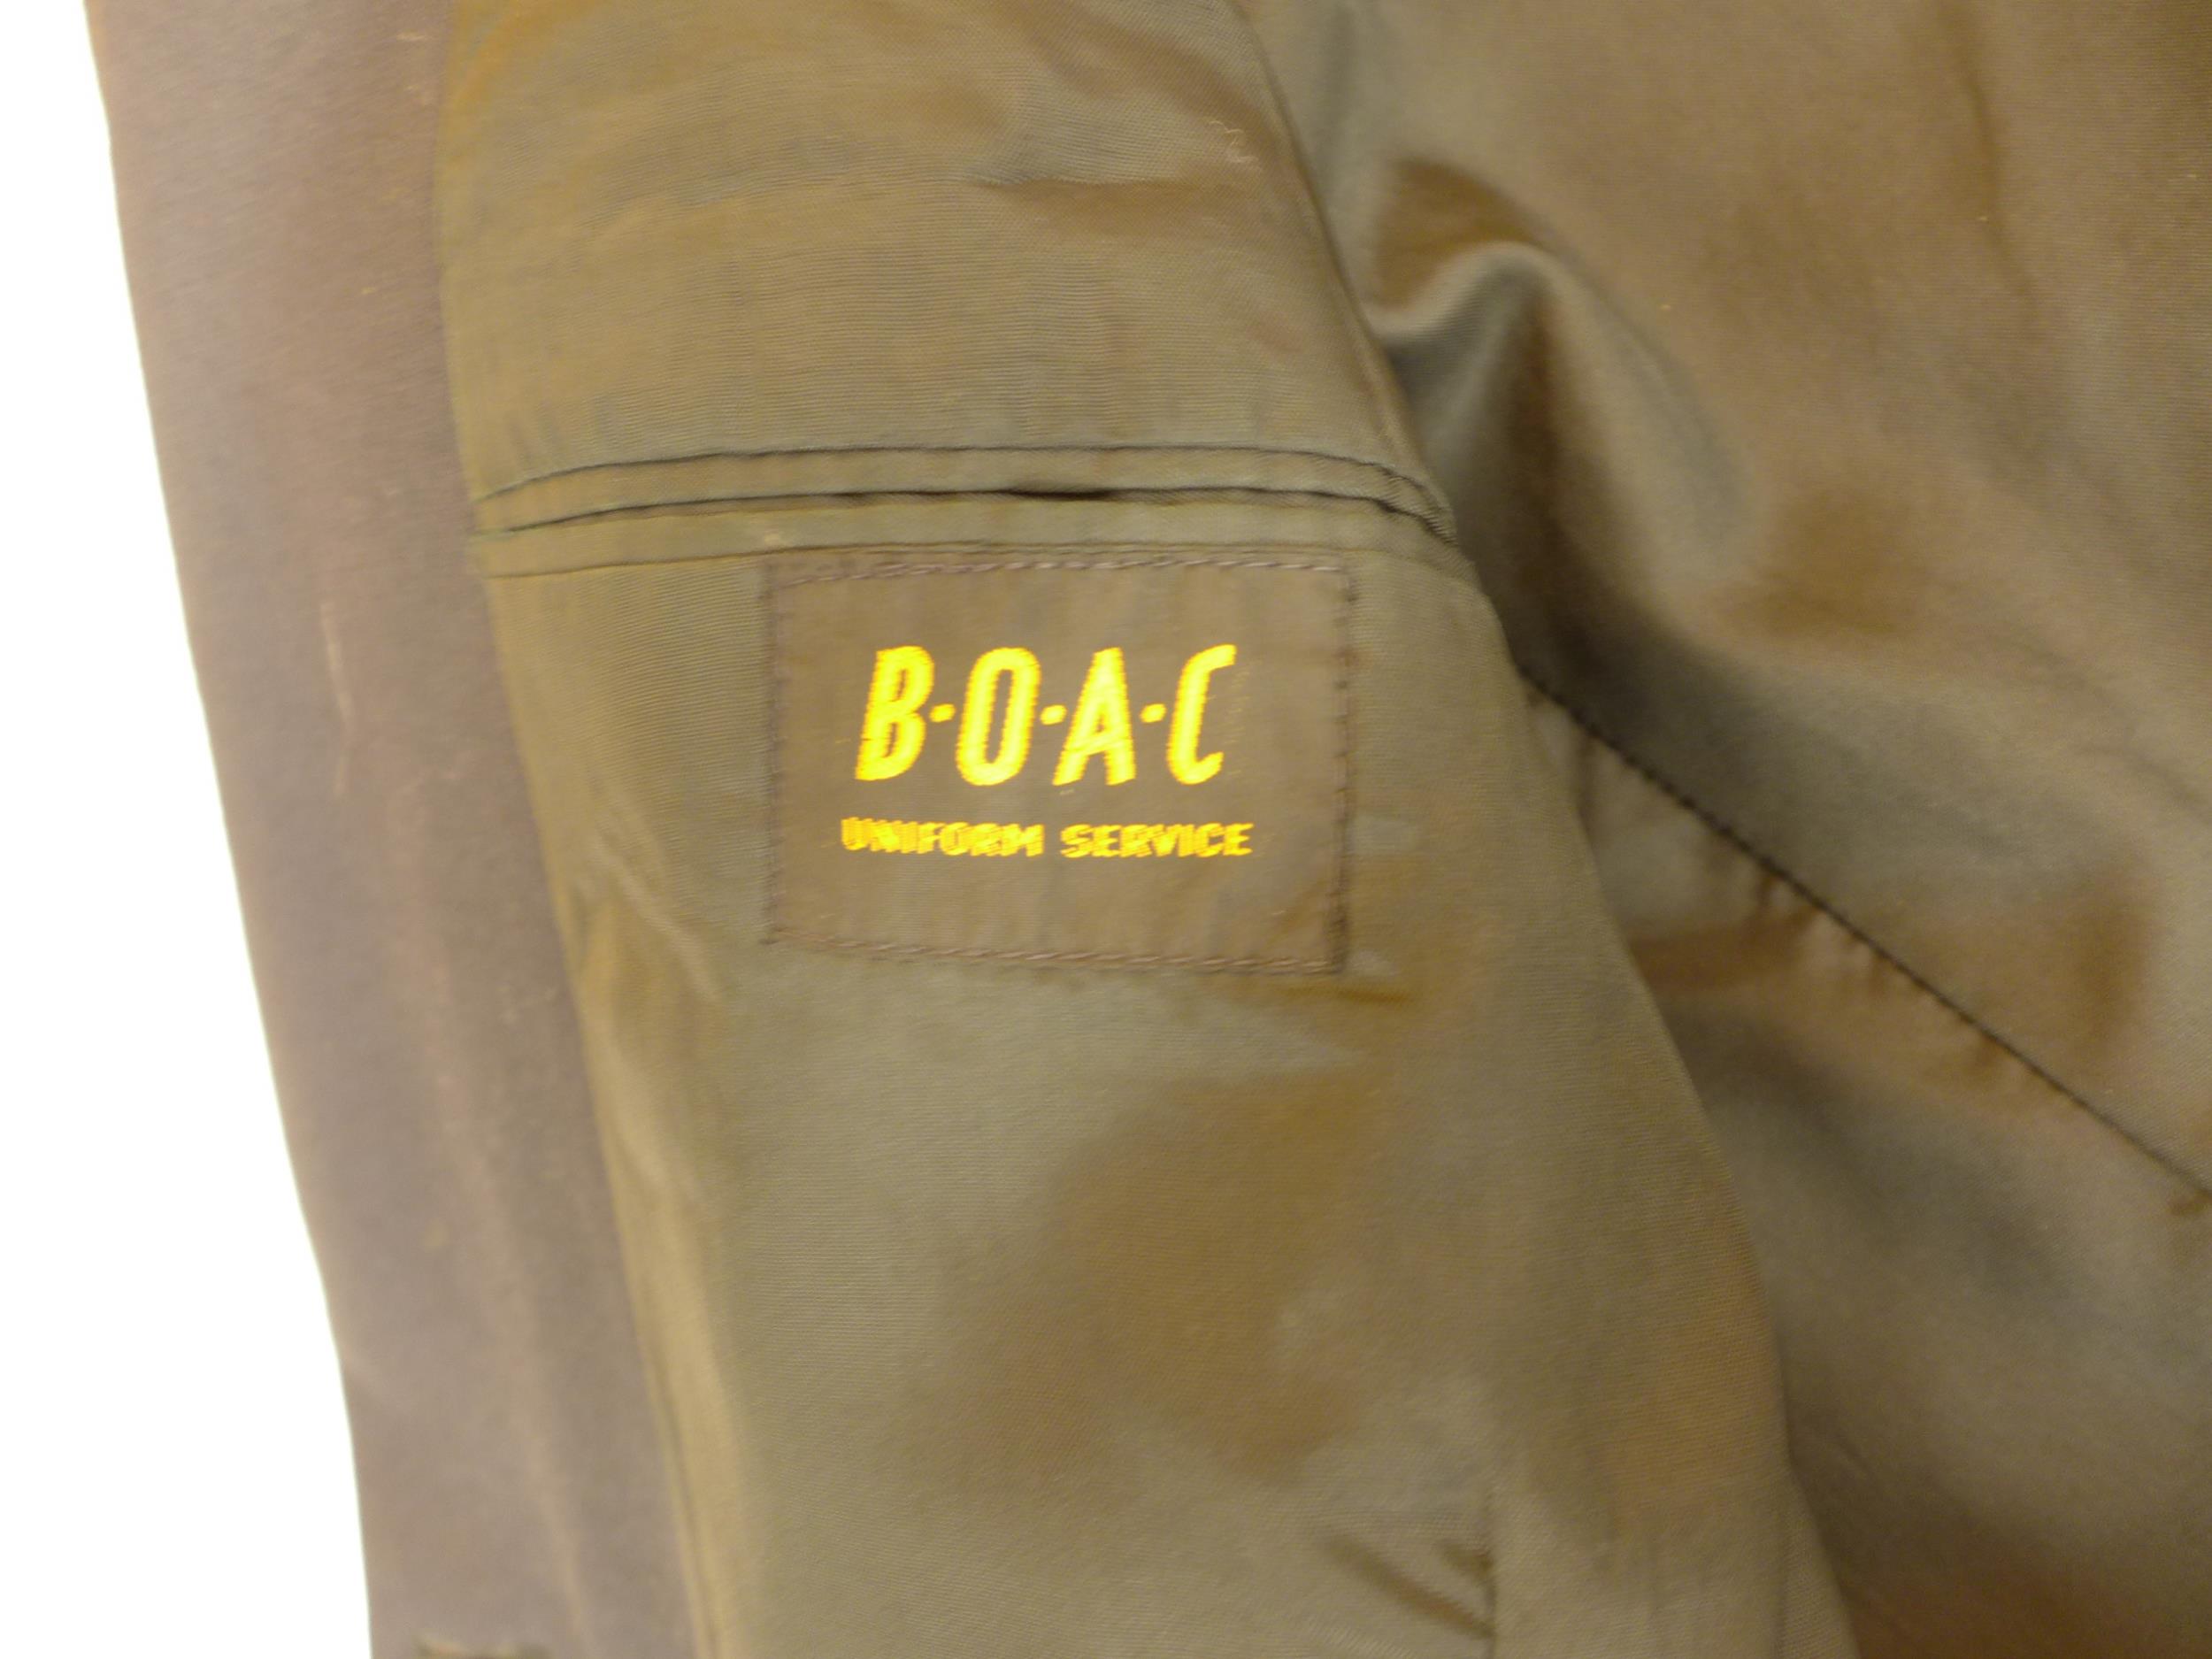 A BOAC PILOTS JACKET - Image 2 of 4